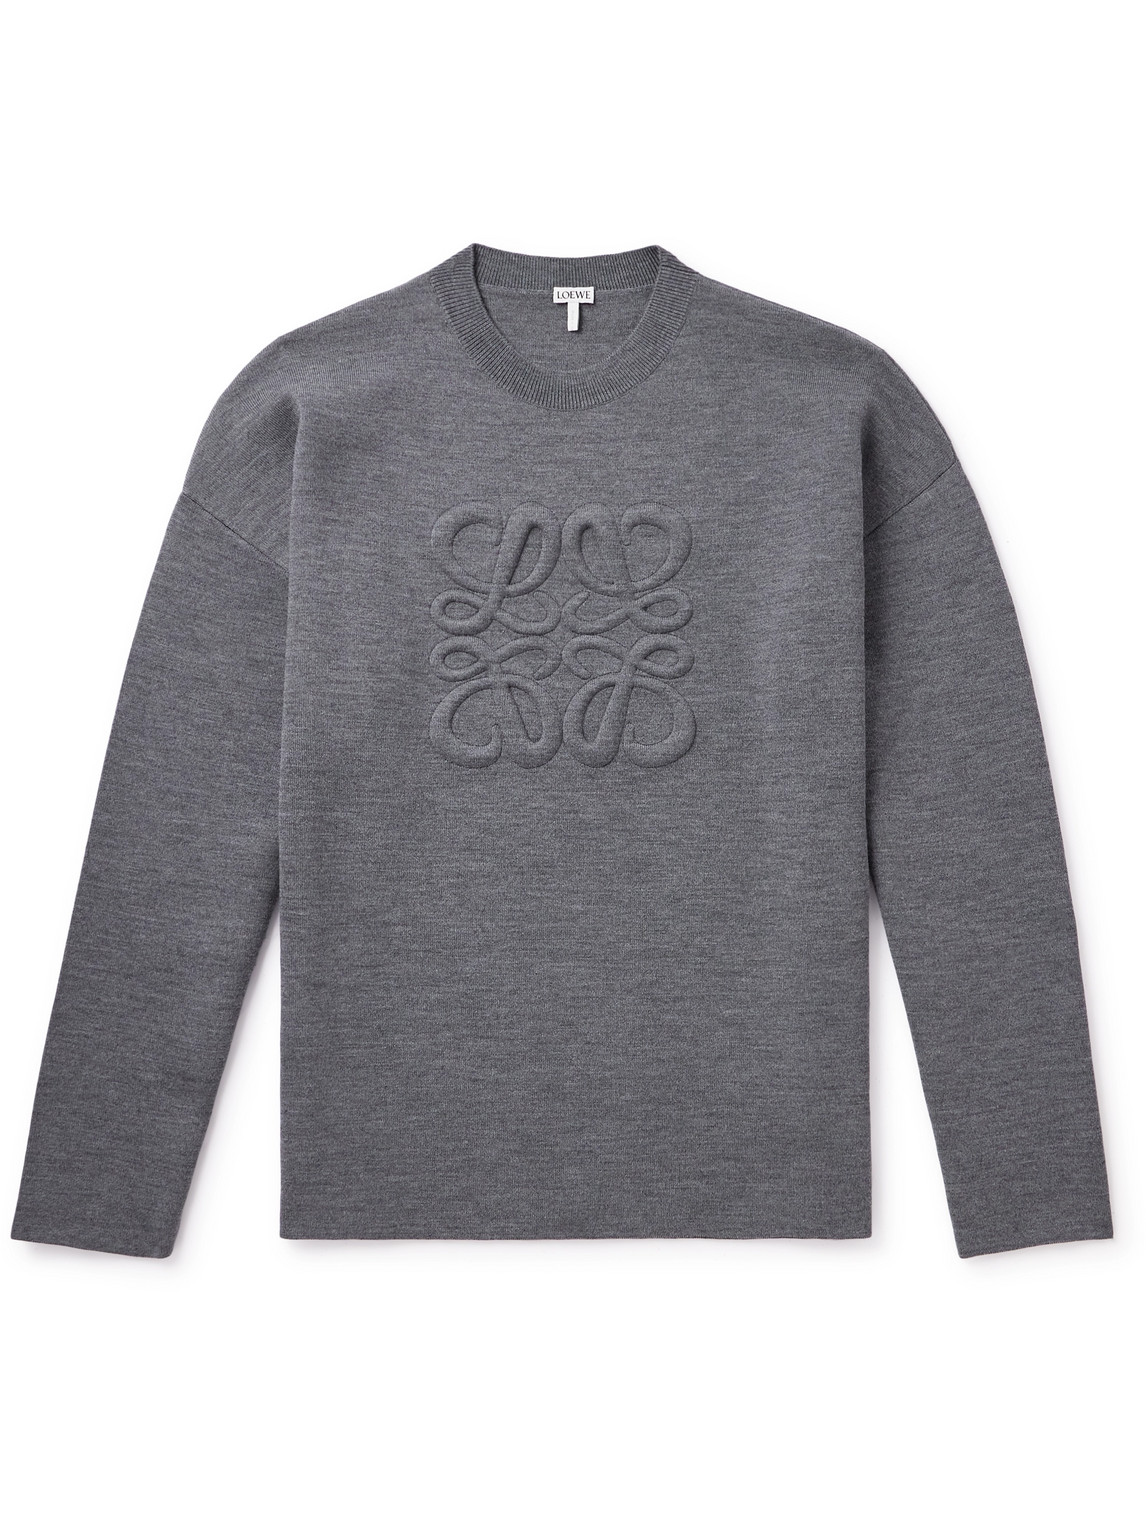 LOEWE - Logo-Embroidered Wool-Blend Sweater - Men - Gray - M von LOEWE